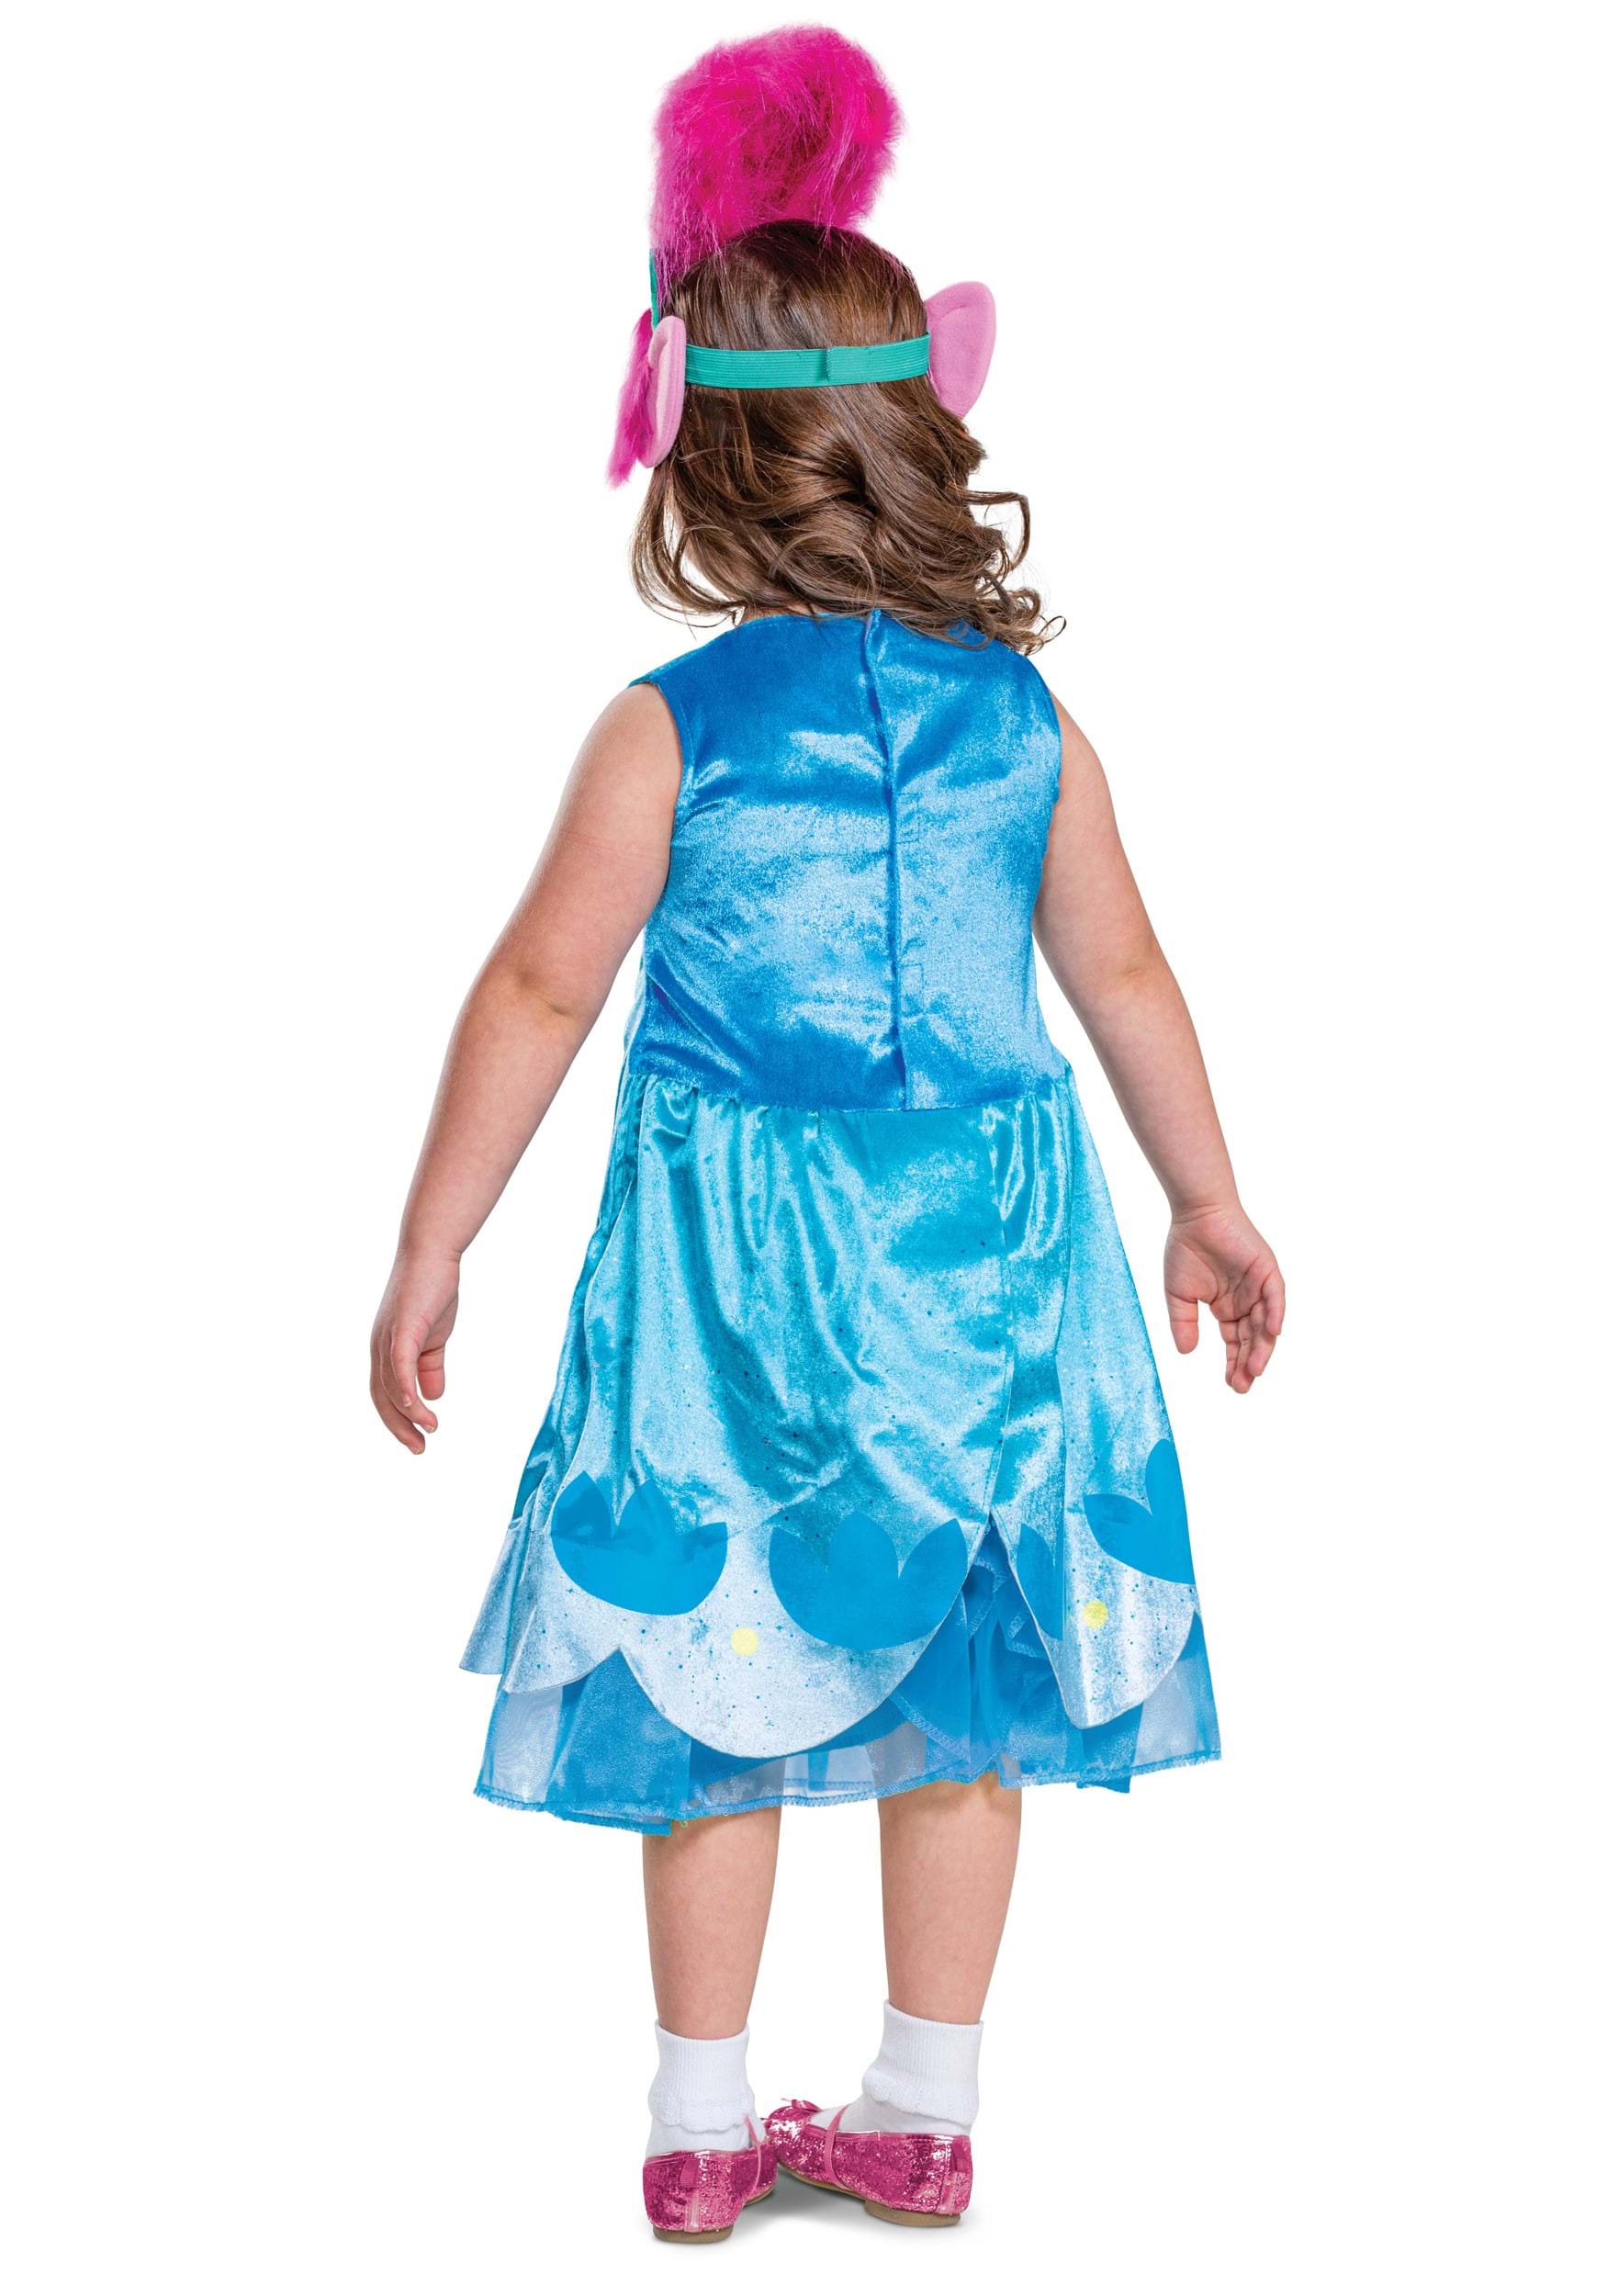 Trolls Poppy Adaptive Costume for Kids